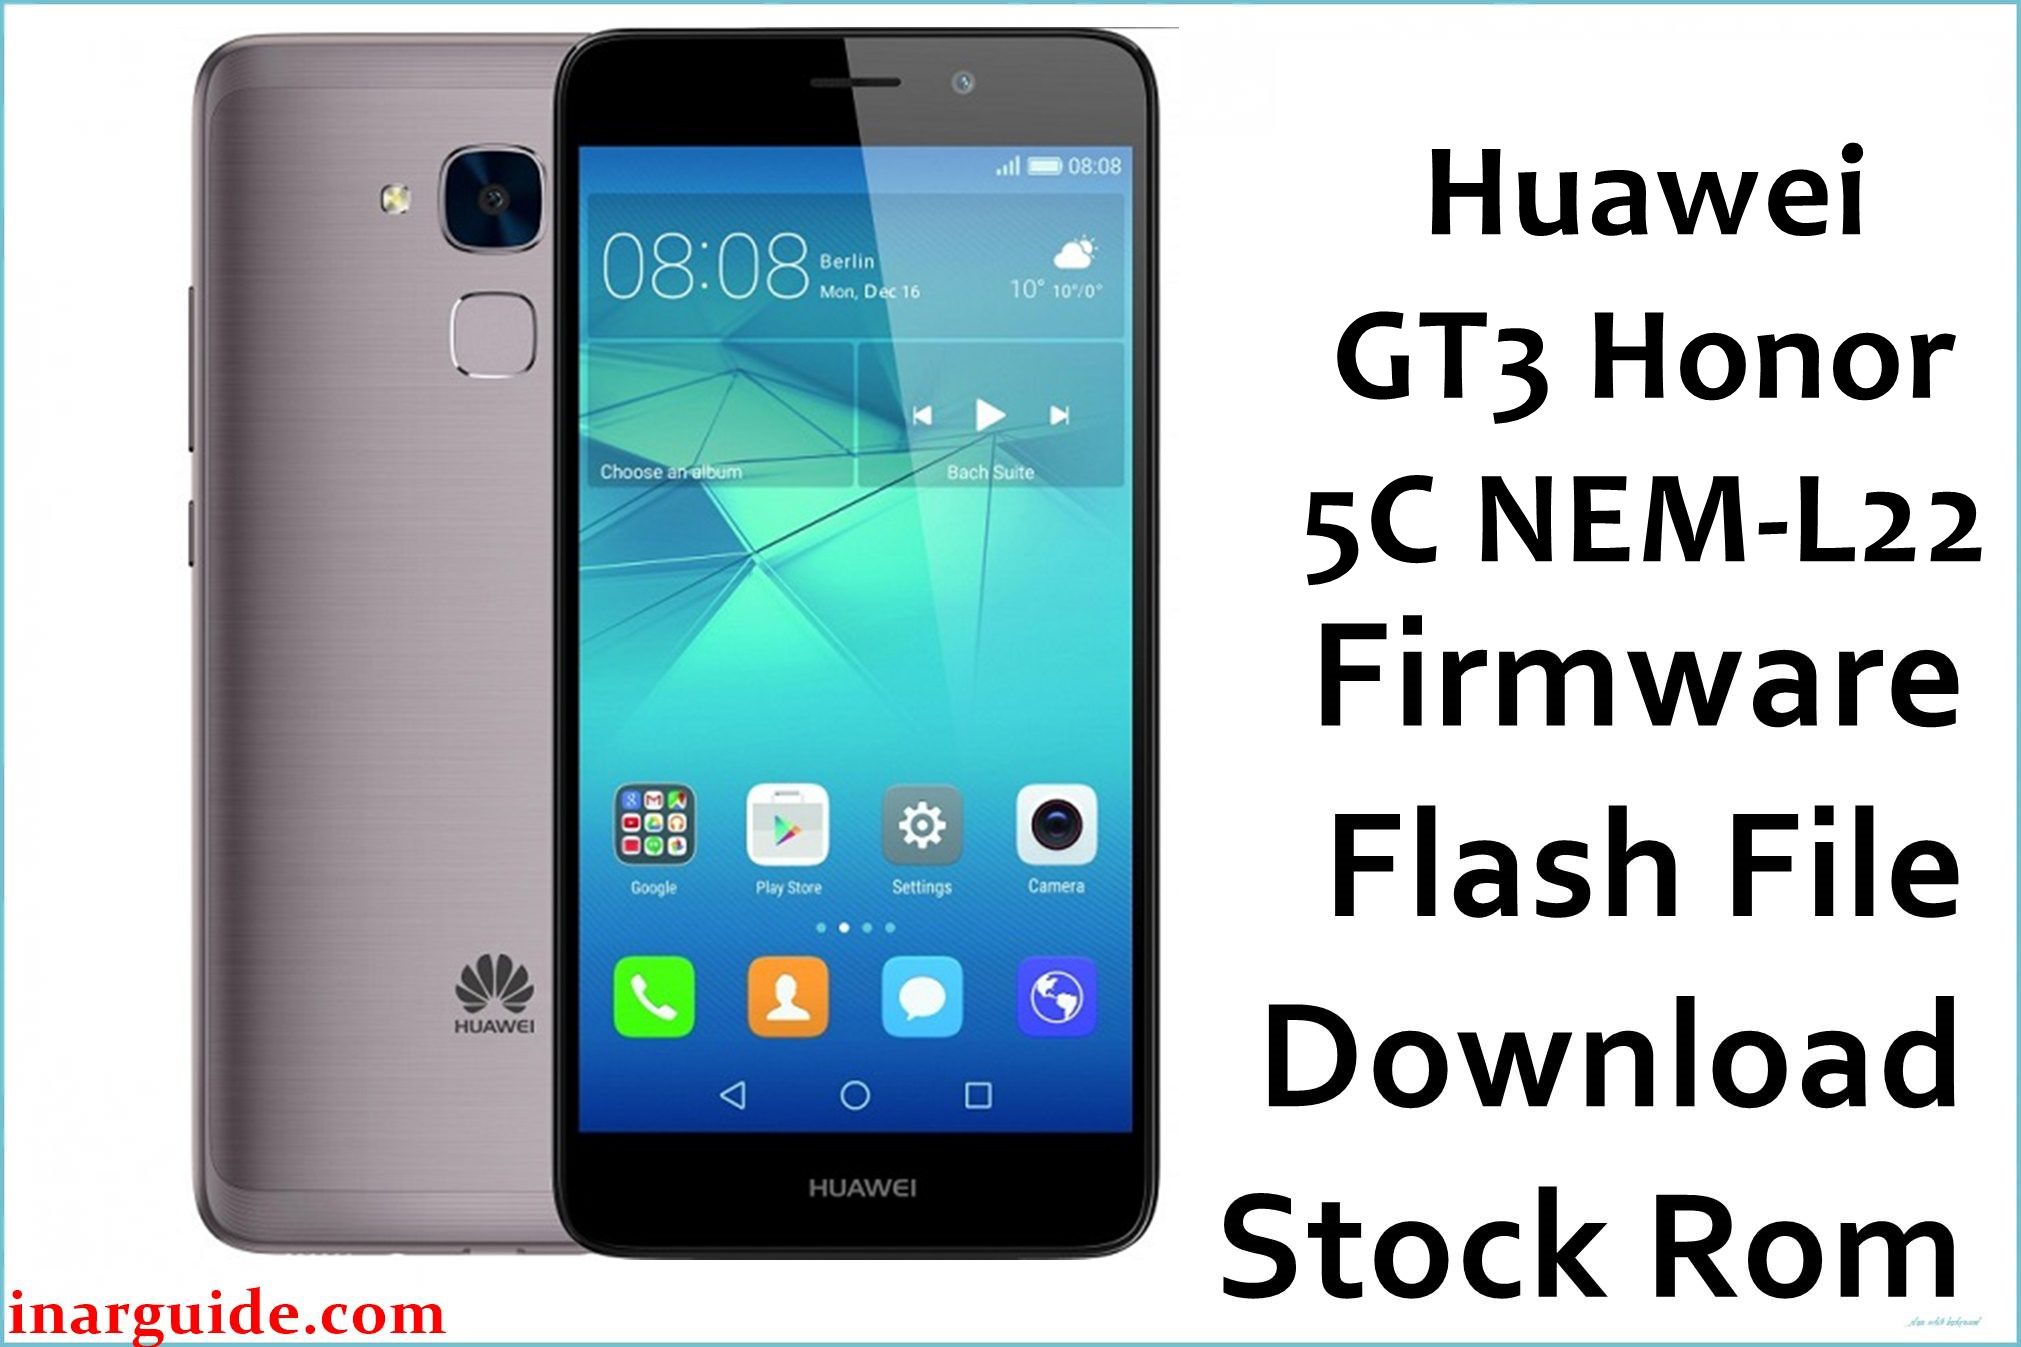 Huawei GT3 Honor 5C NEM L22